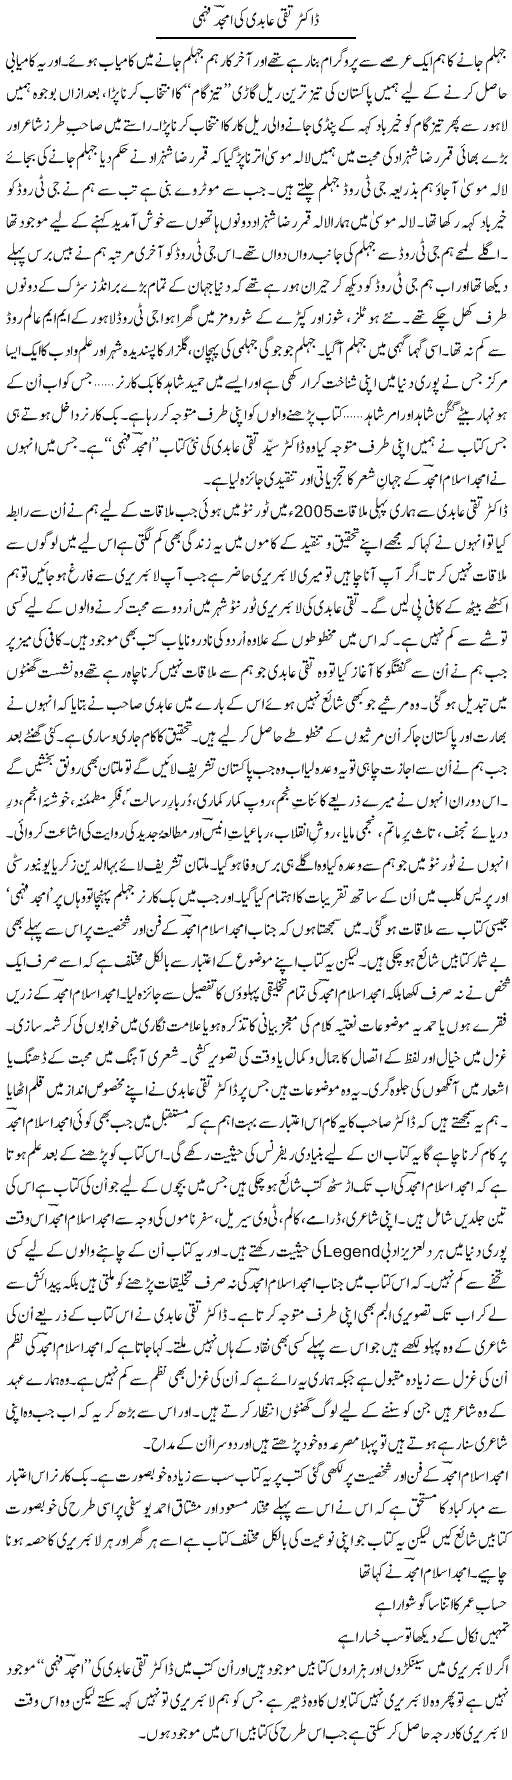 Dr. Taqi Abdi Ki Amjad Fehmi | Shakir Hussain Shakir | Daily Urdu Columns